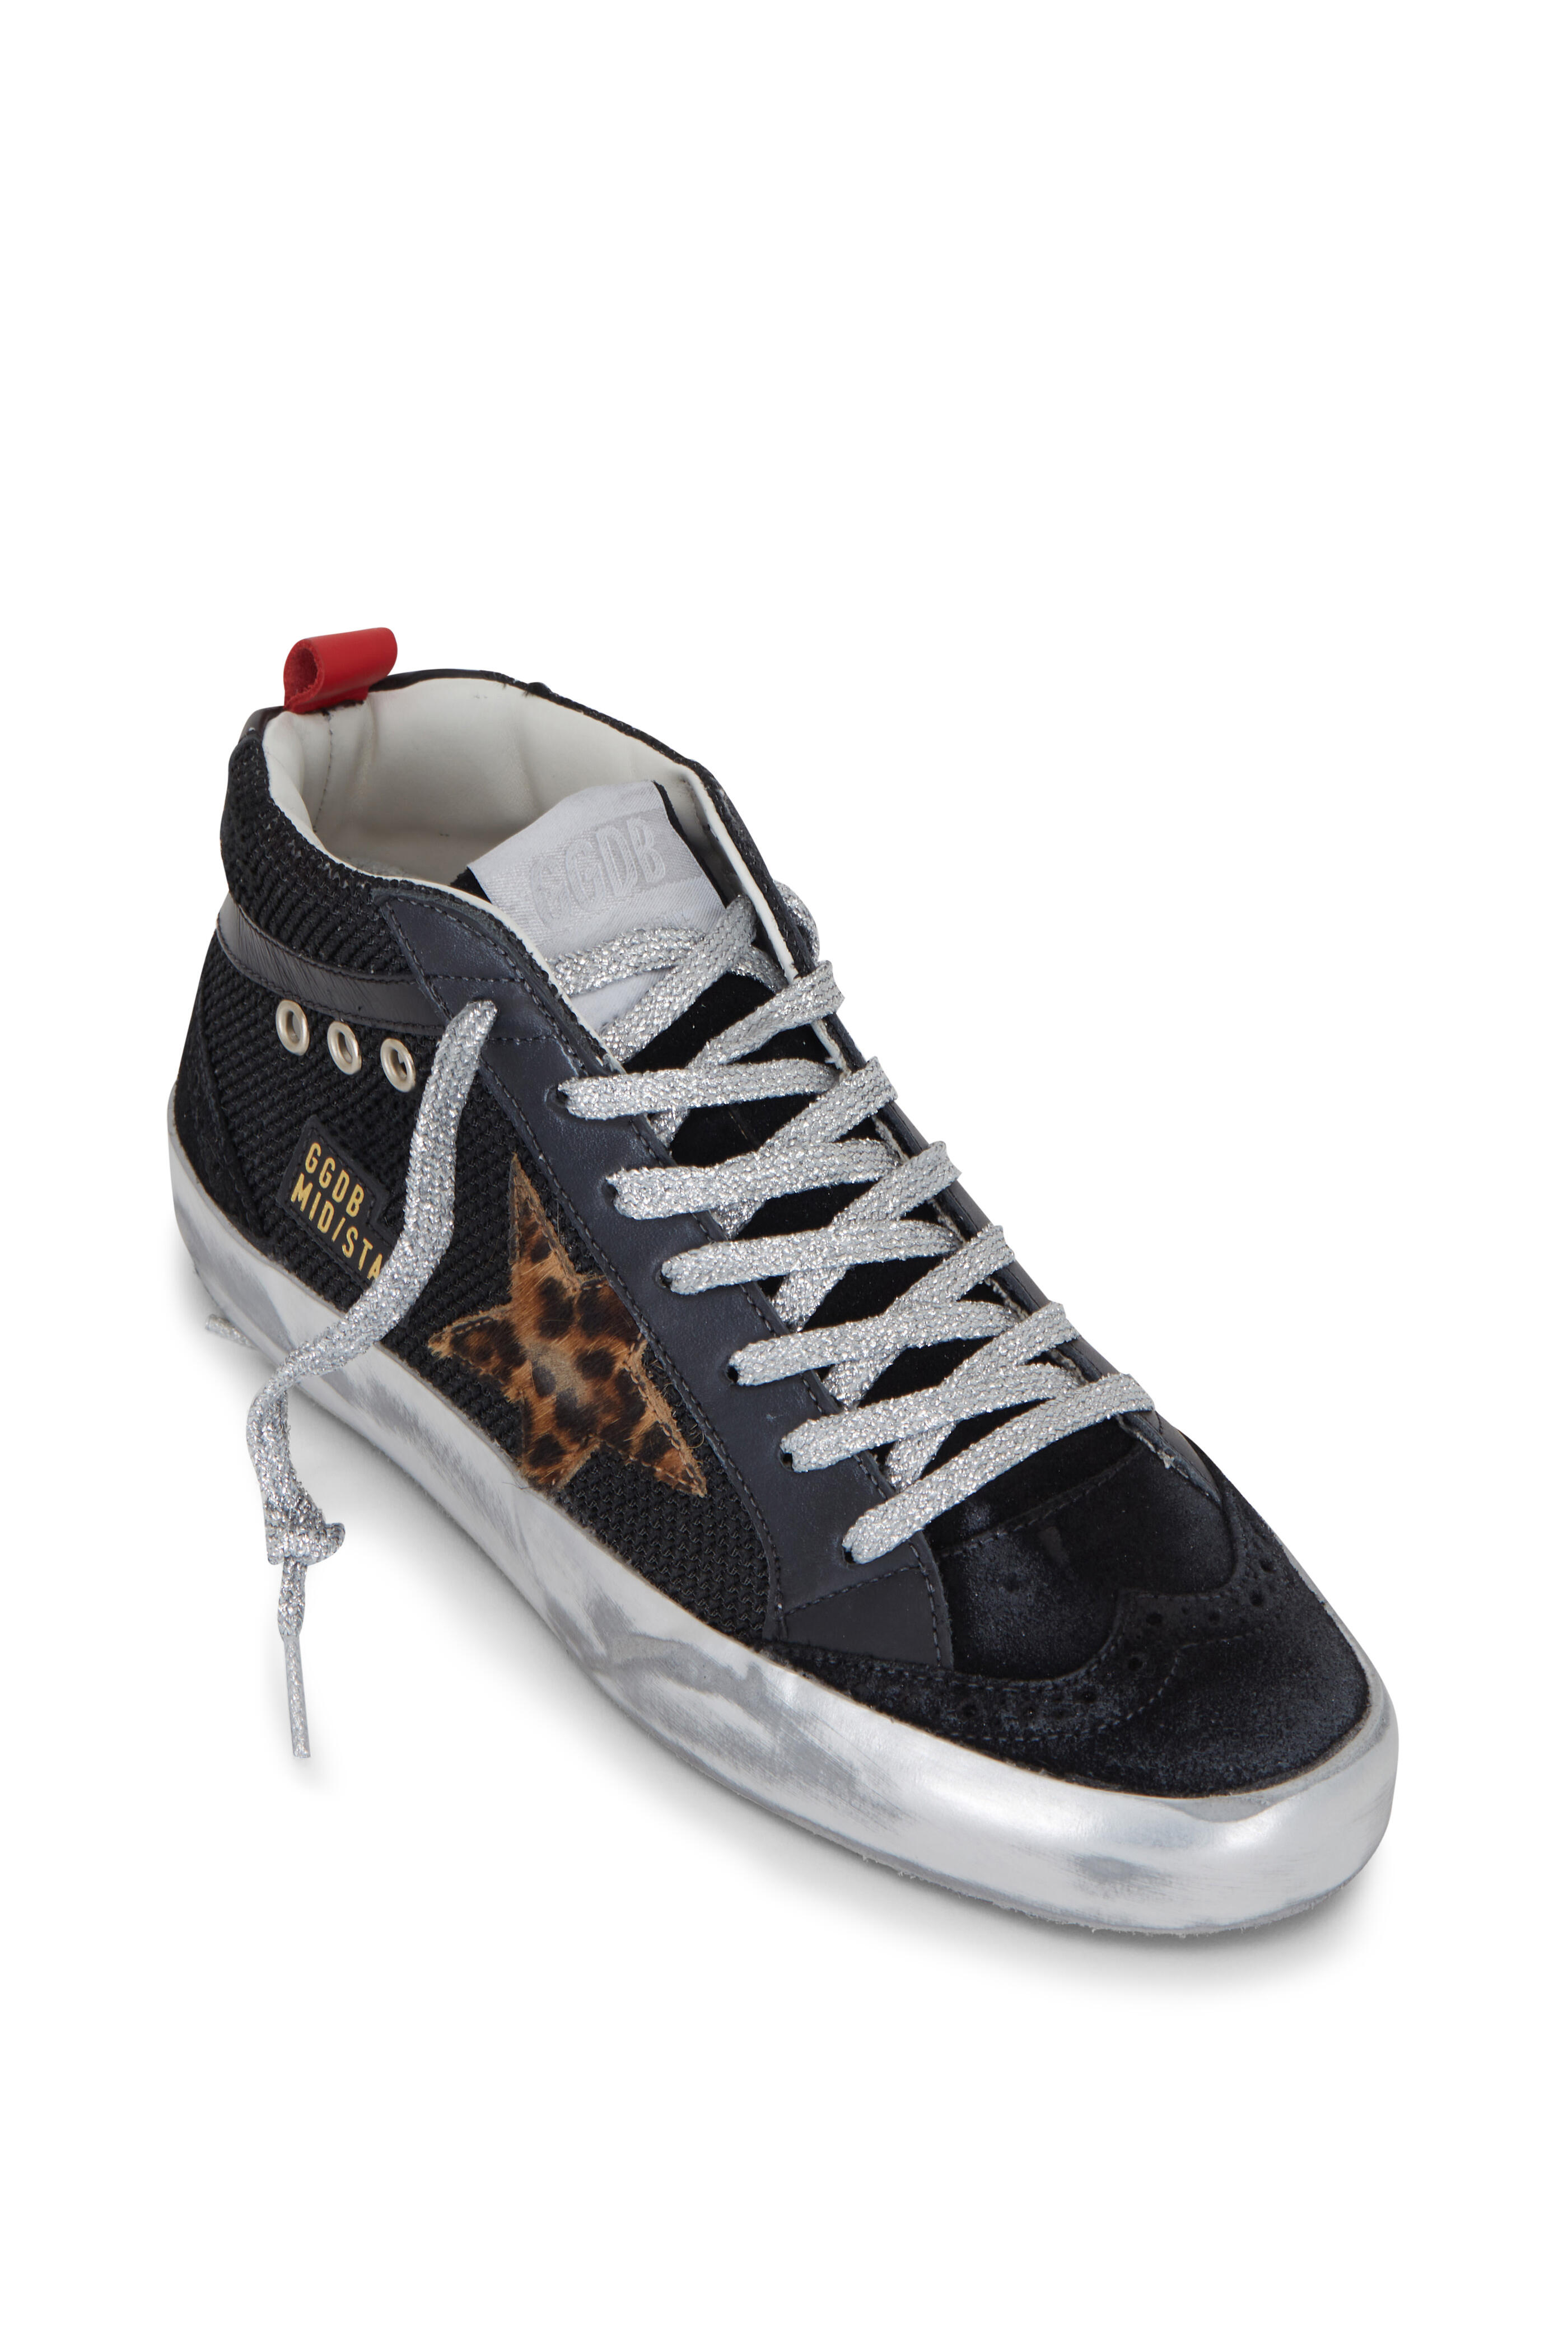 Golden Goose - Midstar Black Nylon & Suede Leopard Star Sneaker